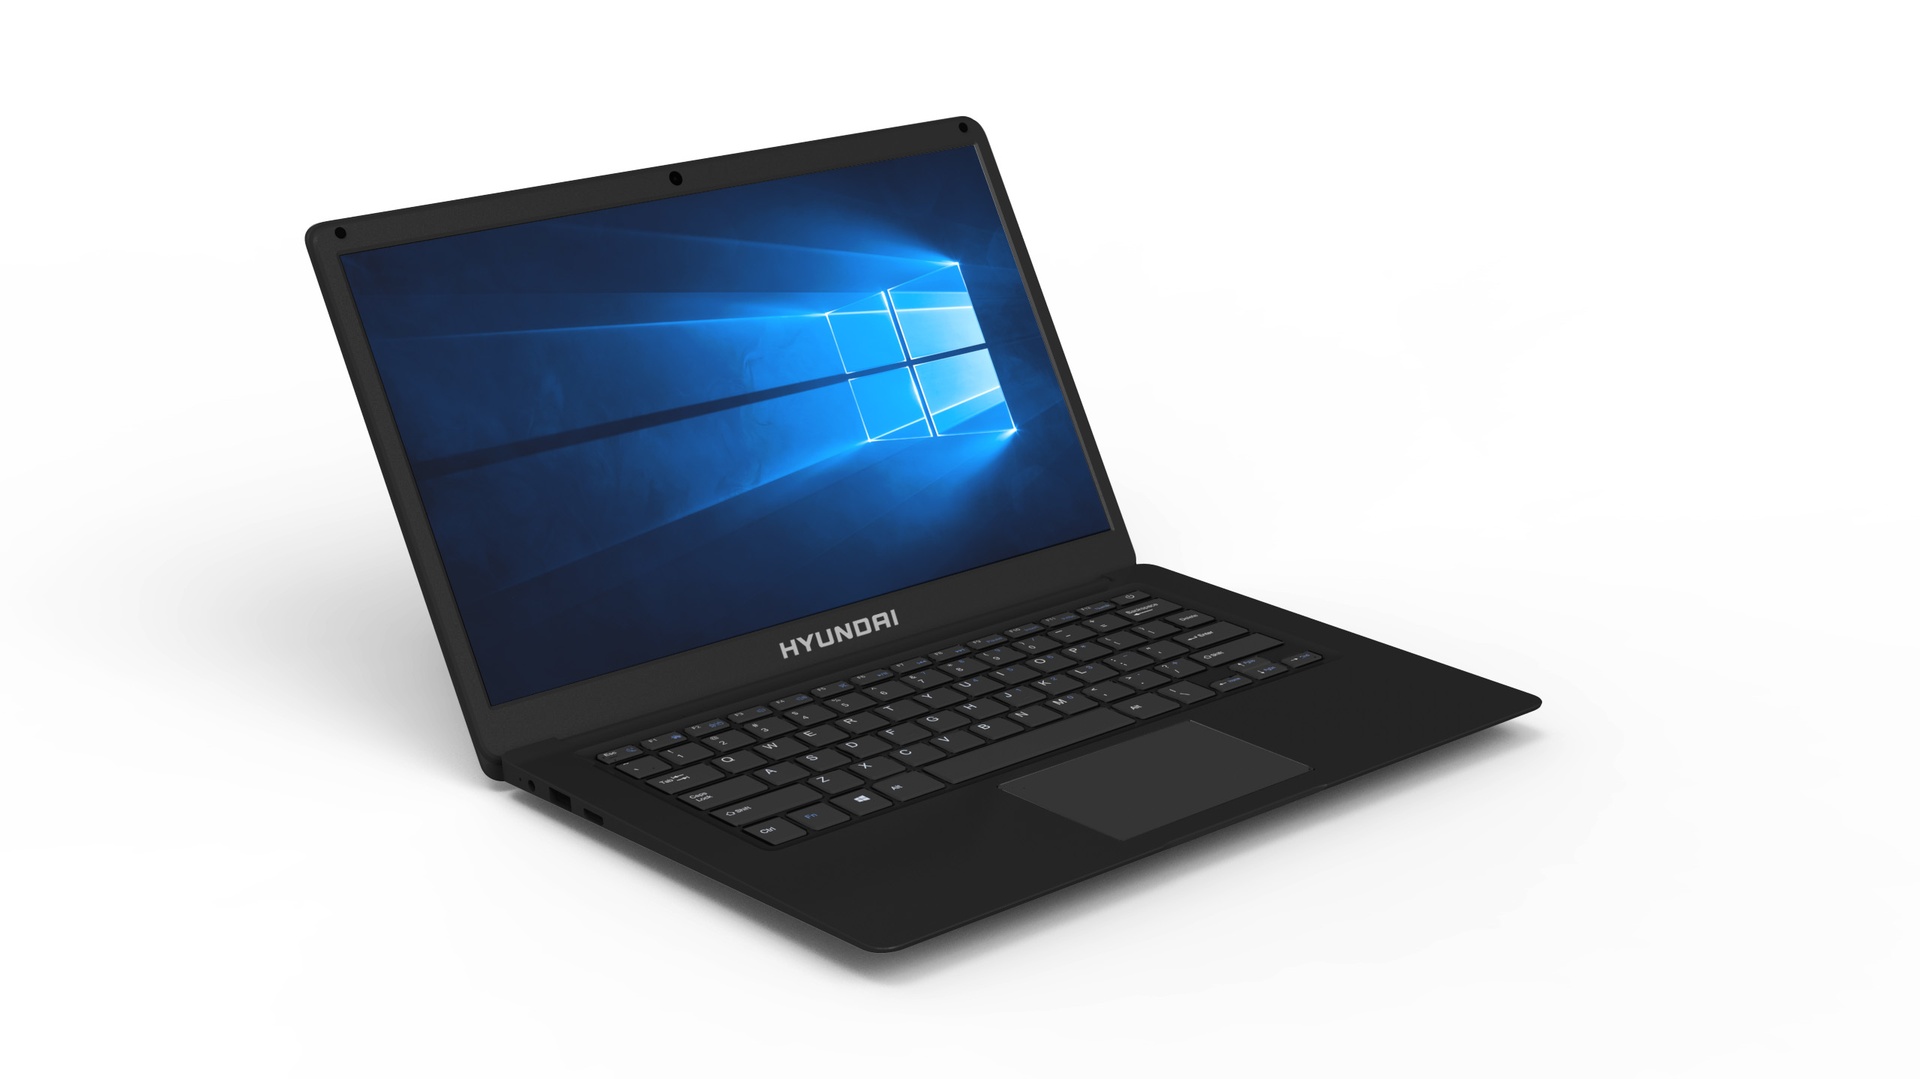 Hyundai Thinnote-A, 14.1" Celeron Laptop, 4GB RAM, 64GB Storage, Expandable  2.5" SATA HDD Slot, Windows 10 Home S Mode, English - Black - Grade B L14WB2BK_B/RFB UPC  - HYUNDAI